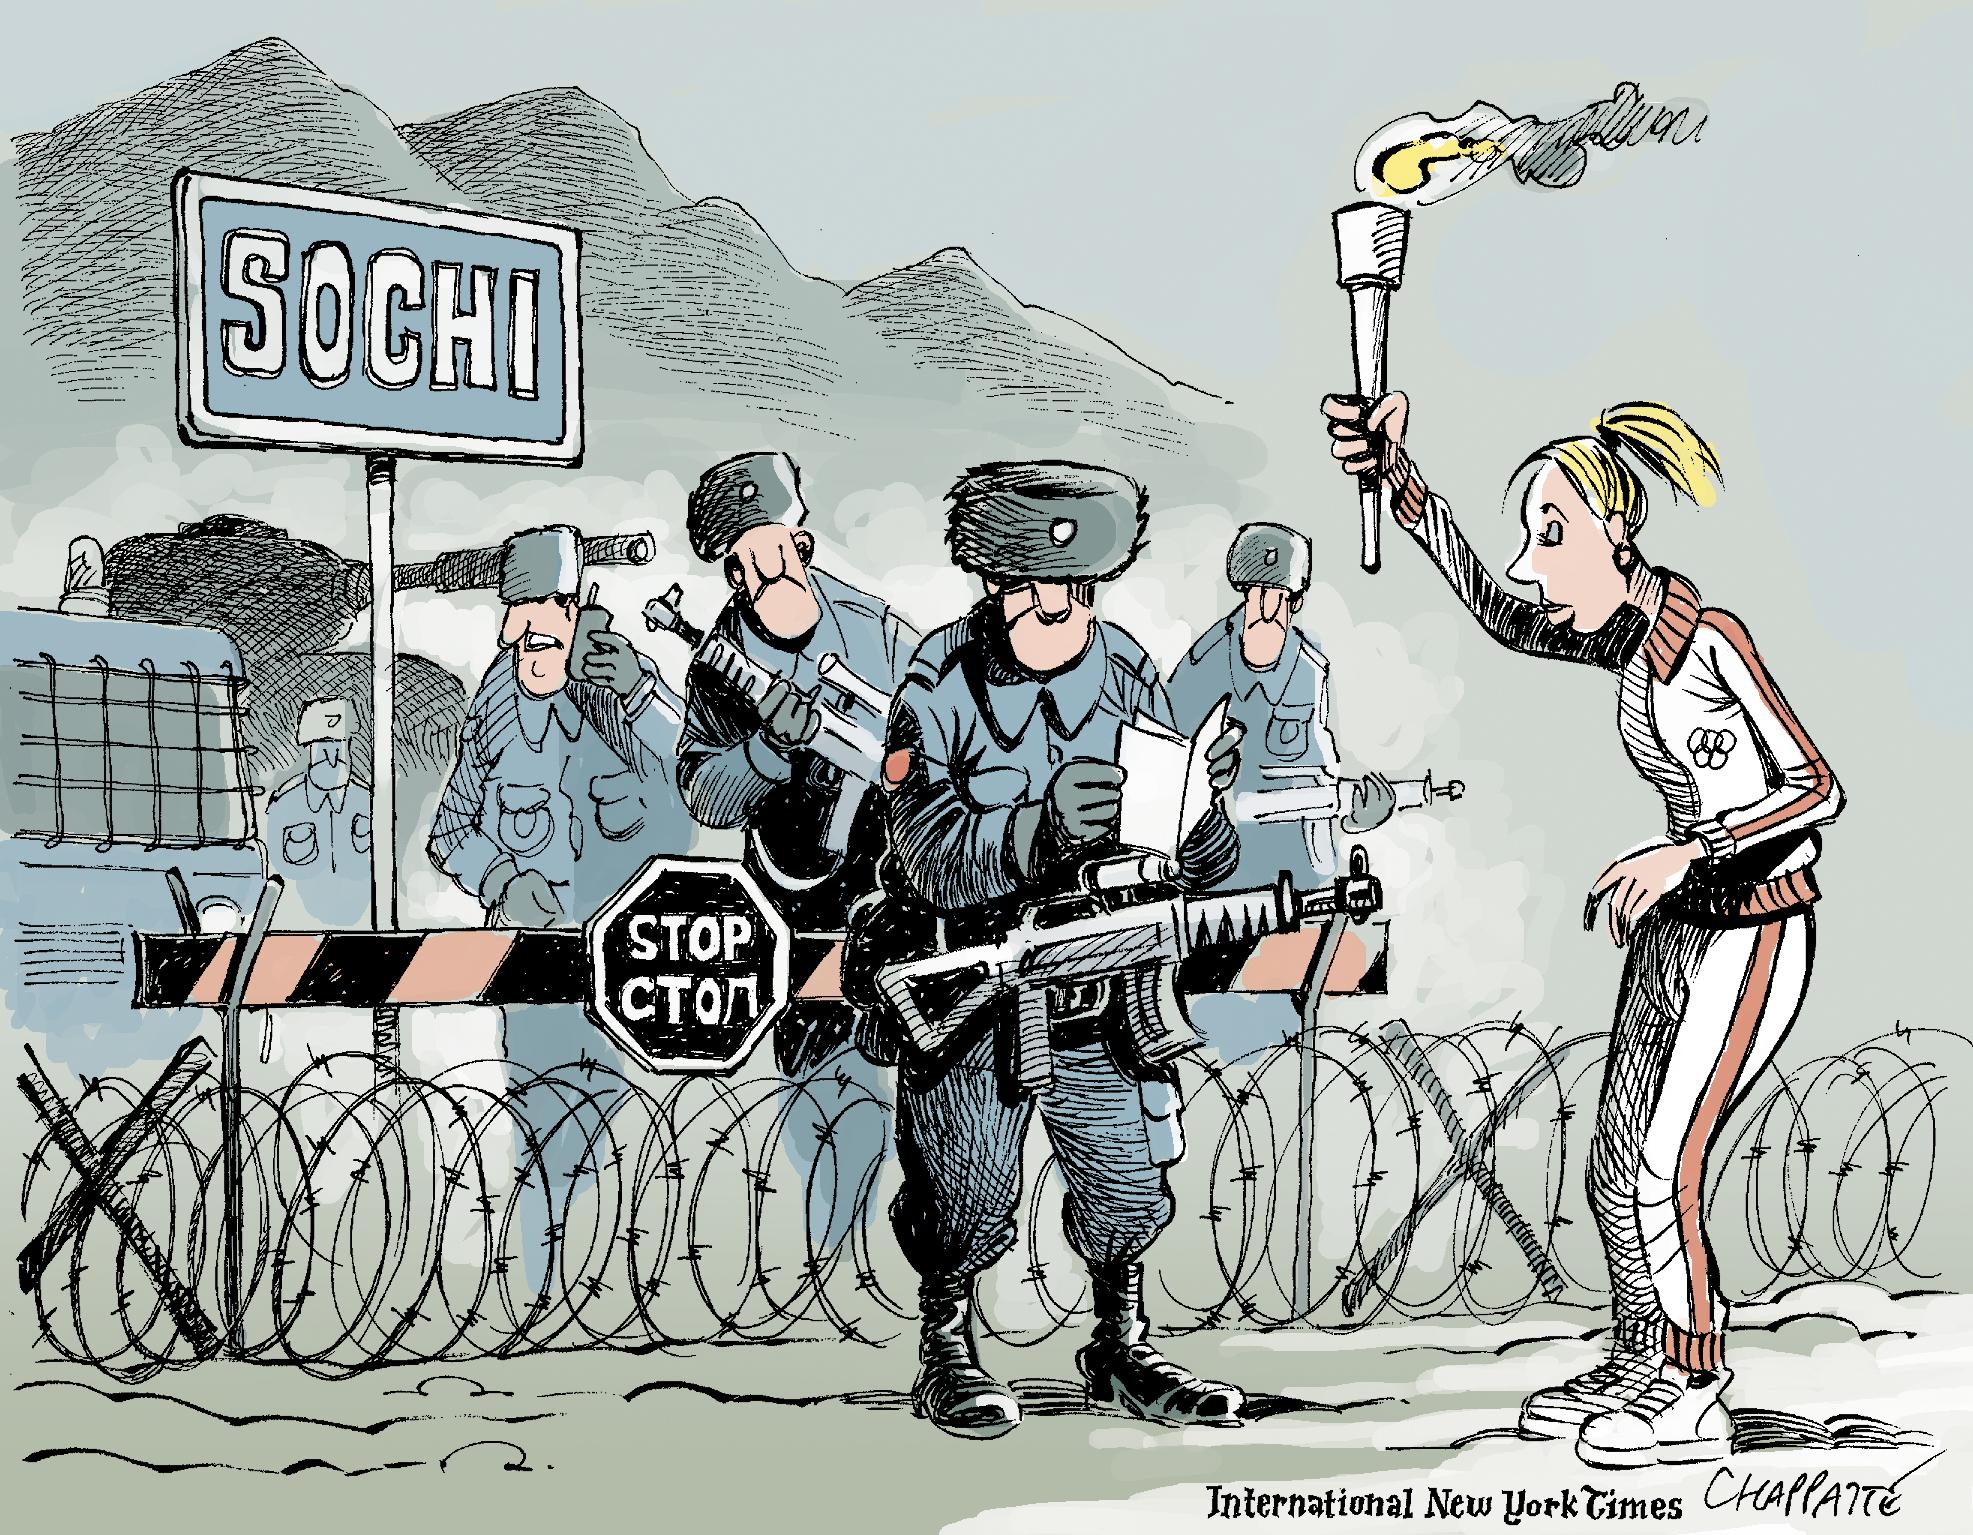 Sochi under high security